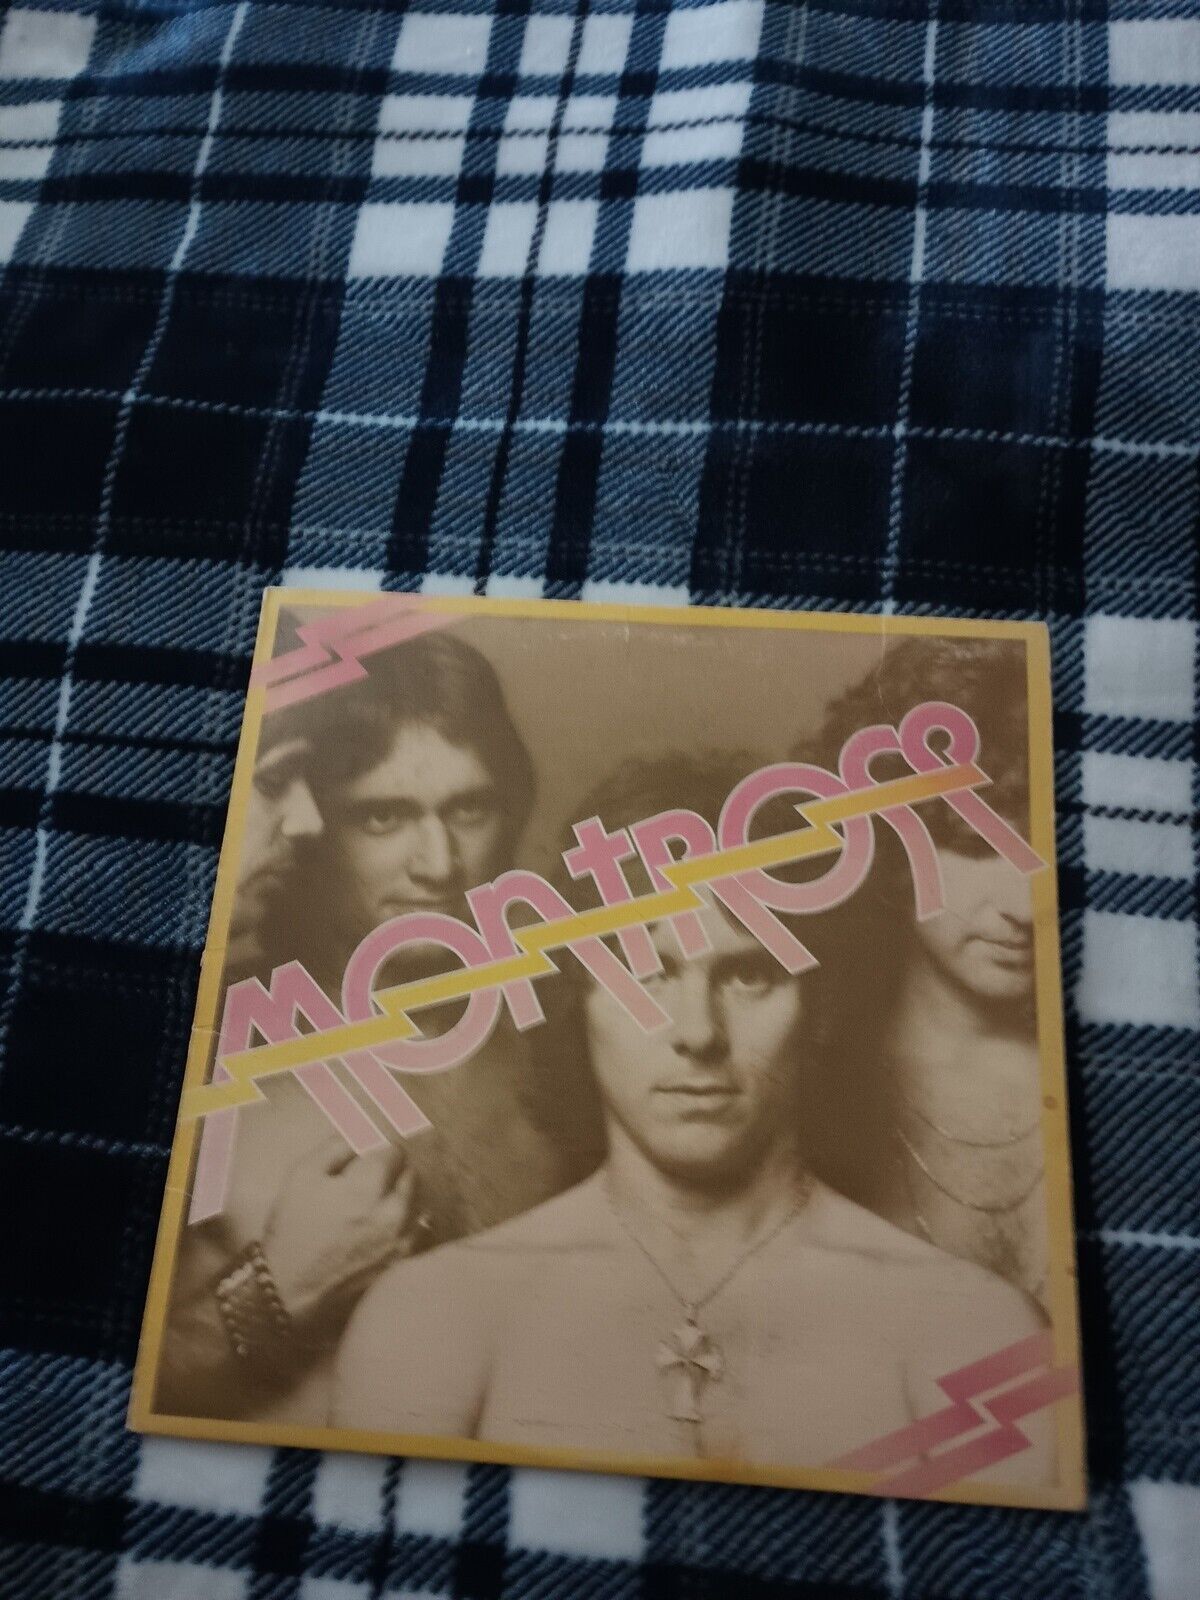 MONTROSE Self-Titled Warner Bros BS 2740 From 1973